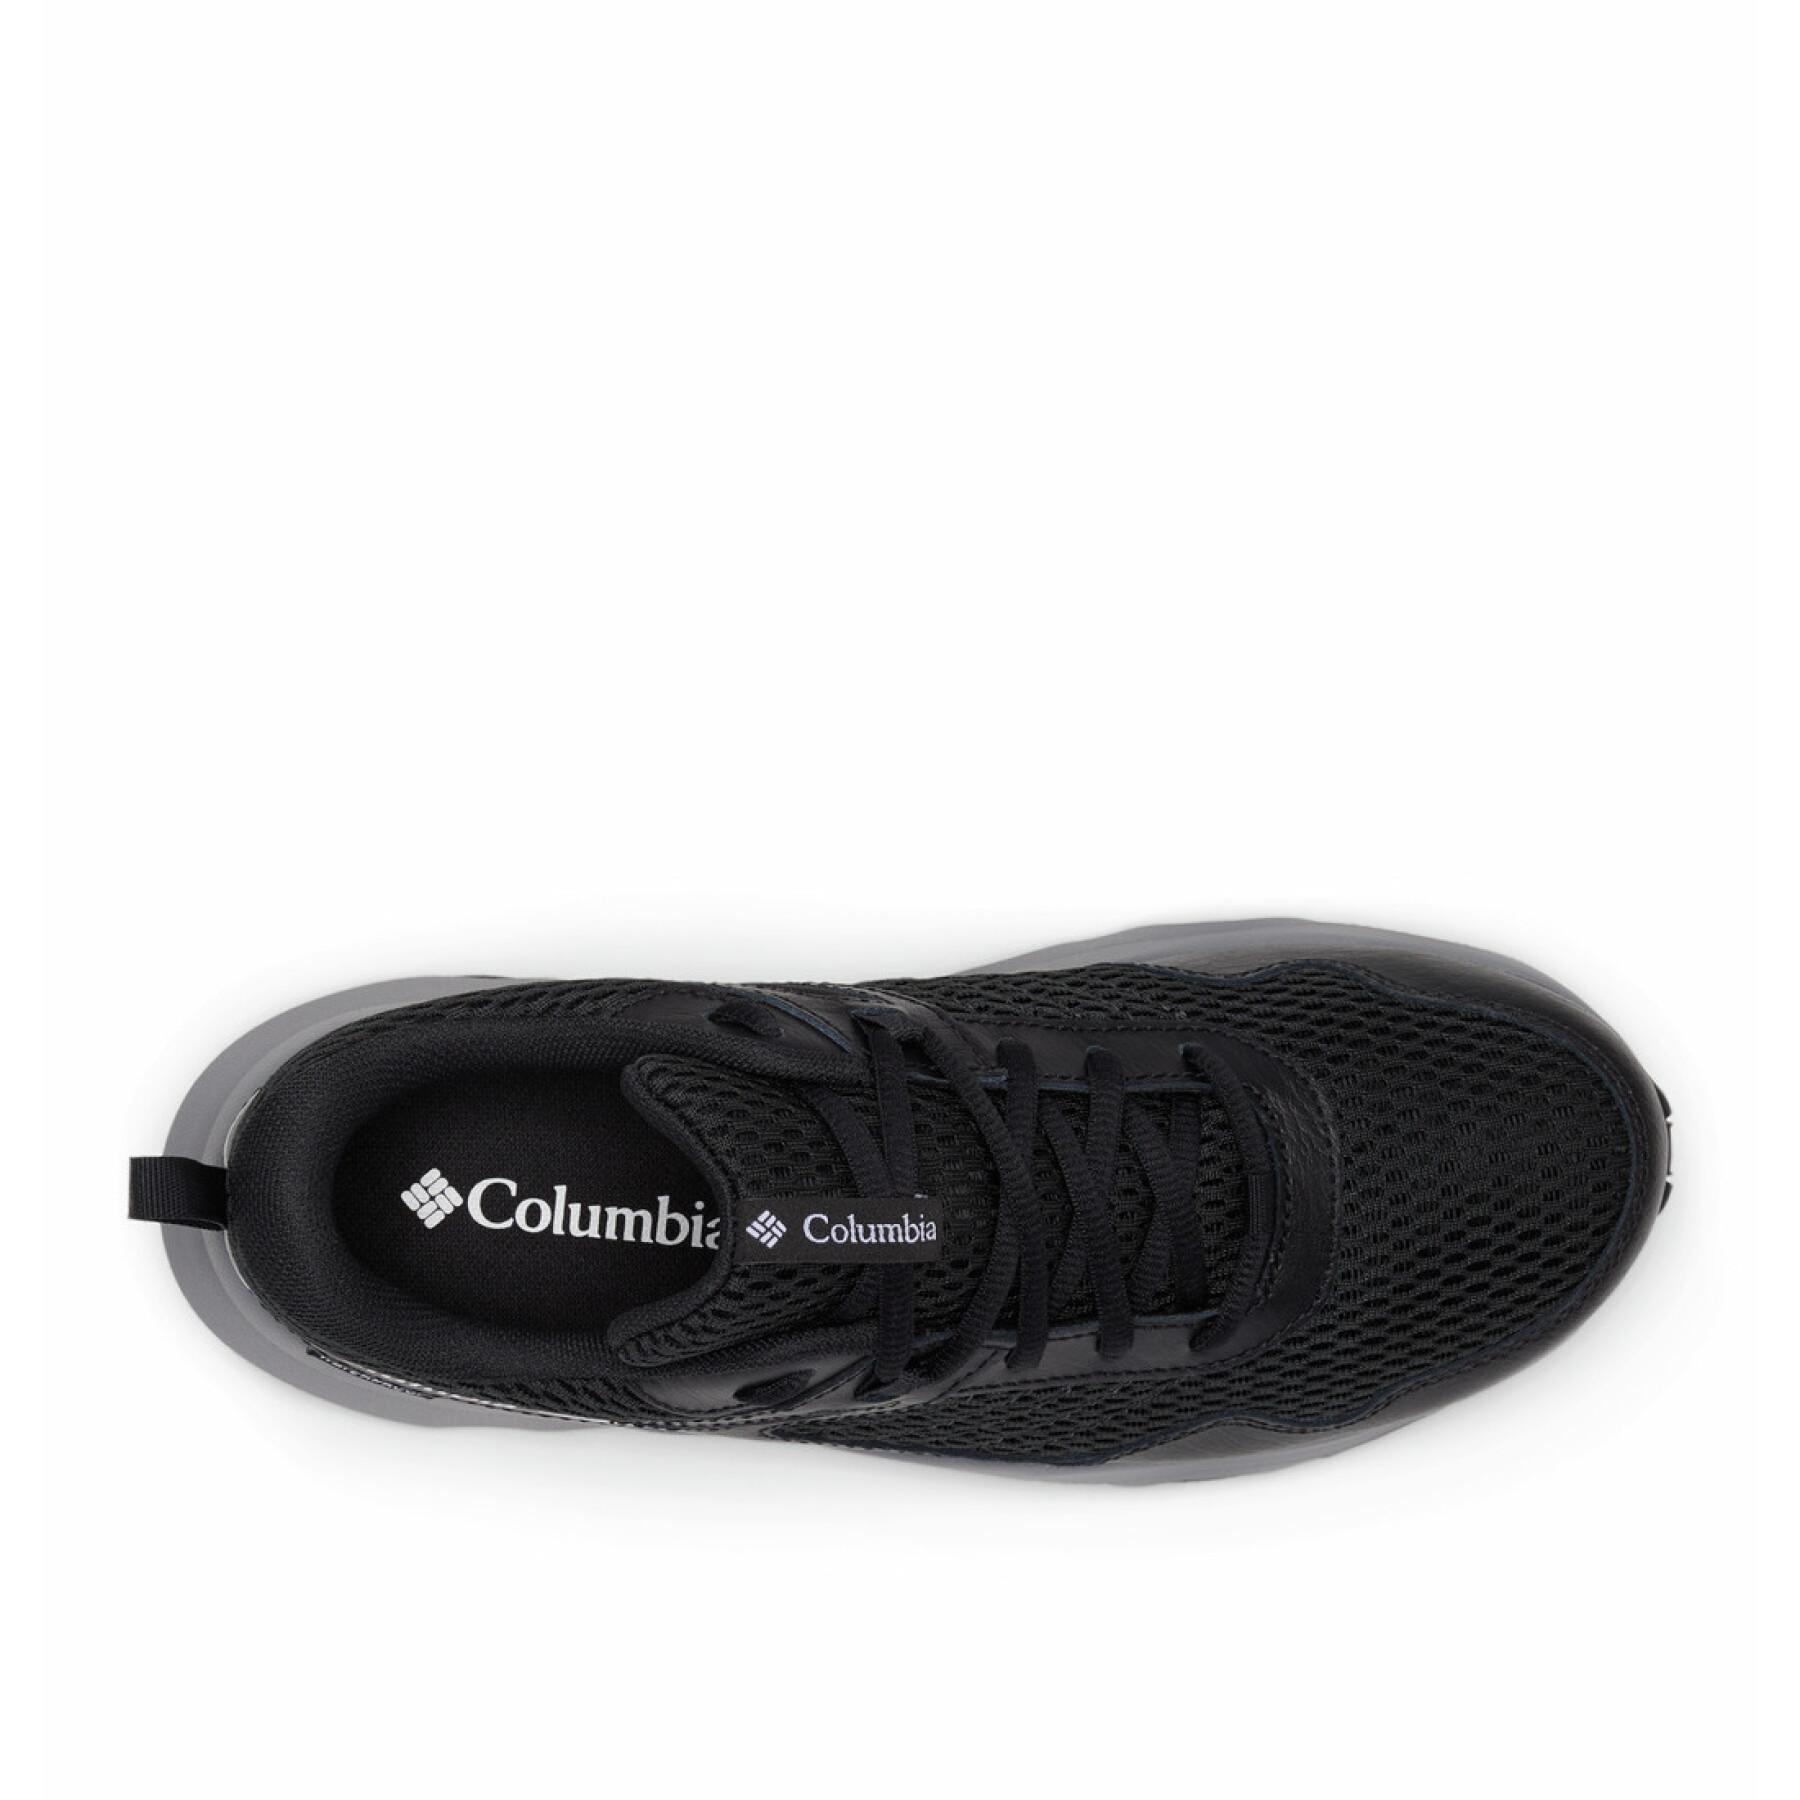 Schuhe für Frauen Columbia Plateau Waterproof